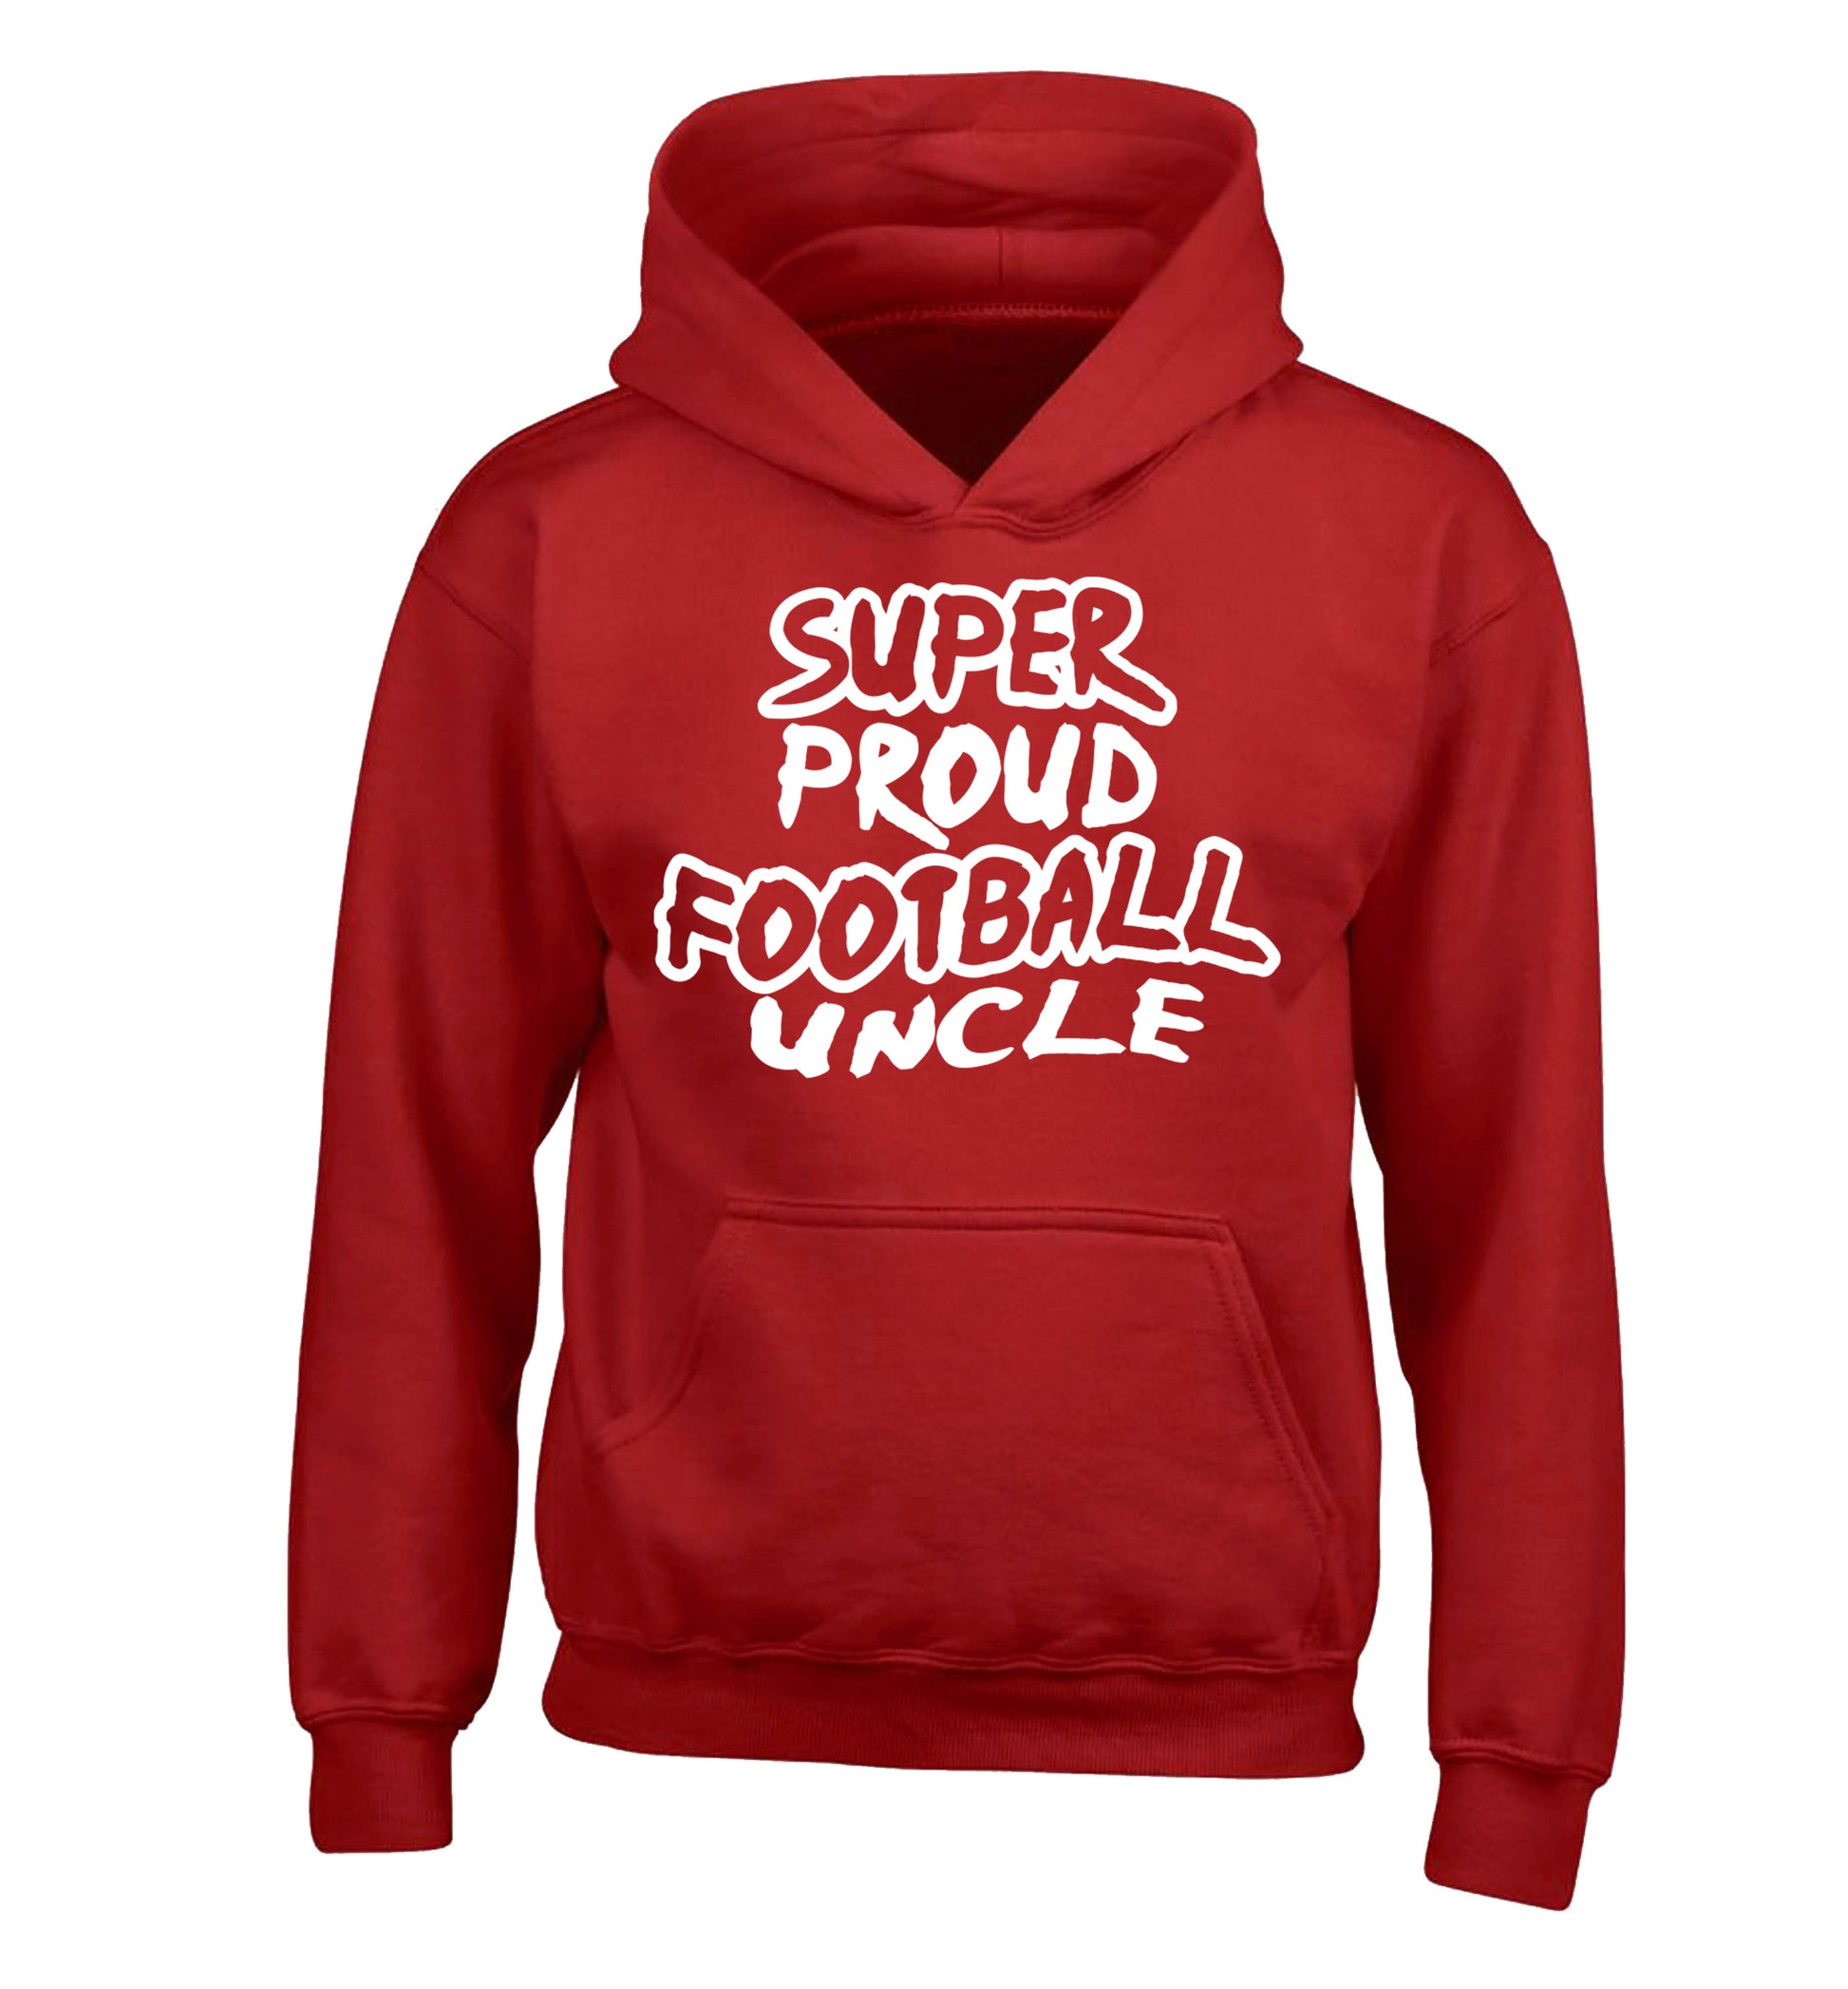 Super proud football uncle children's red hoodie 12-14 Years